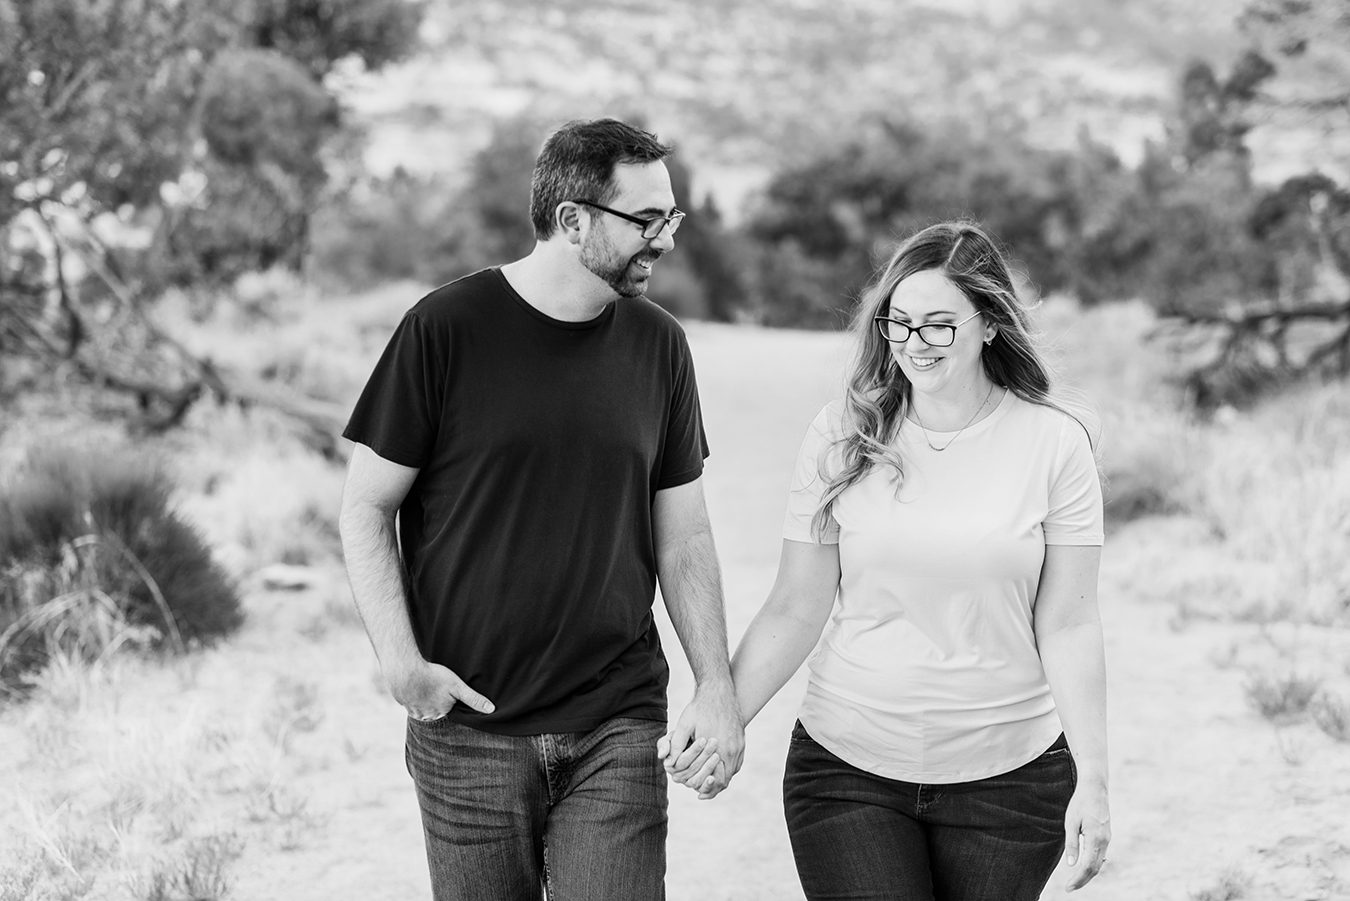 Laura & Joe | Engagement Photos on the Colorado National Monument